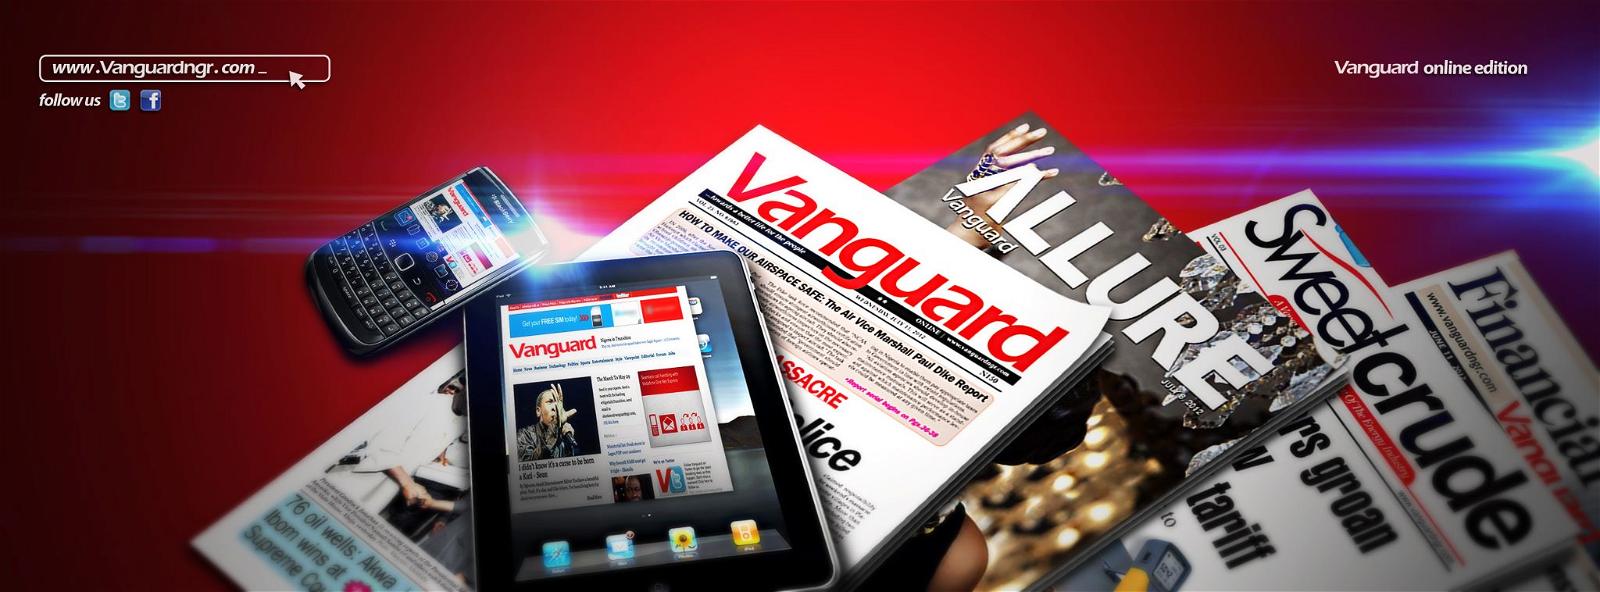 Vanguard News Nigeria